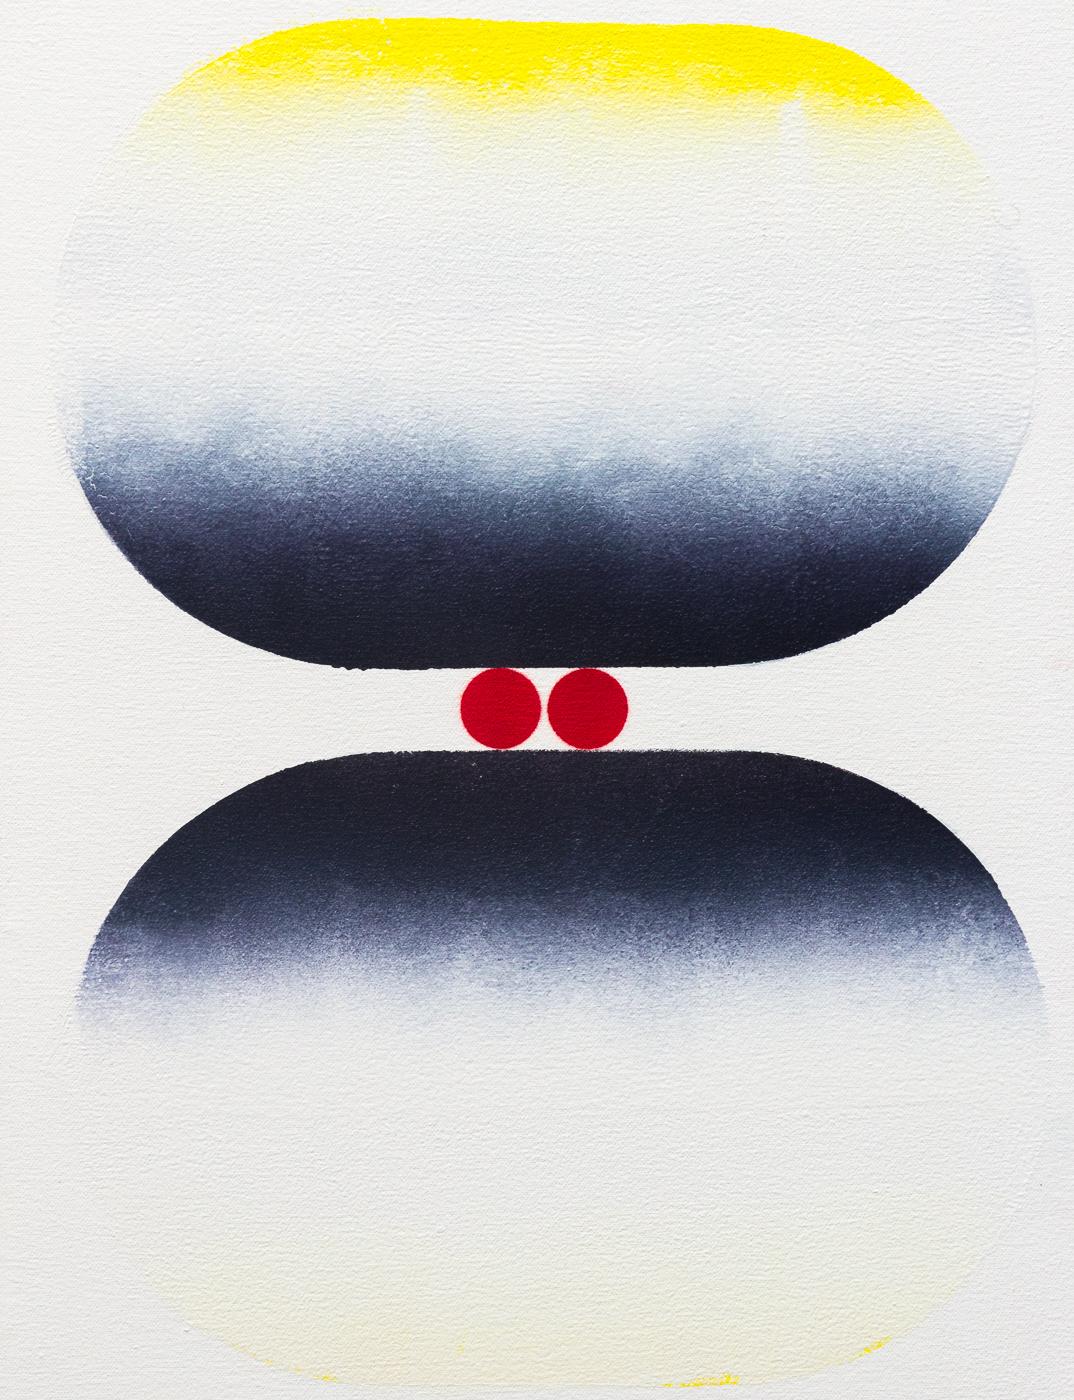 Tom Martinelli, Eye-Mind No. 1218, 2018, acrylic, canvas, 17.75 x 13.5 inches